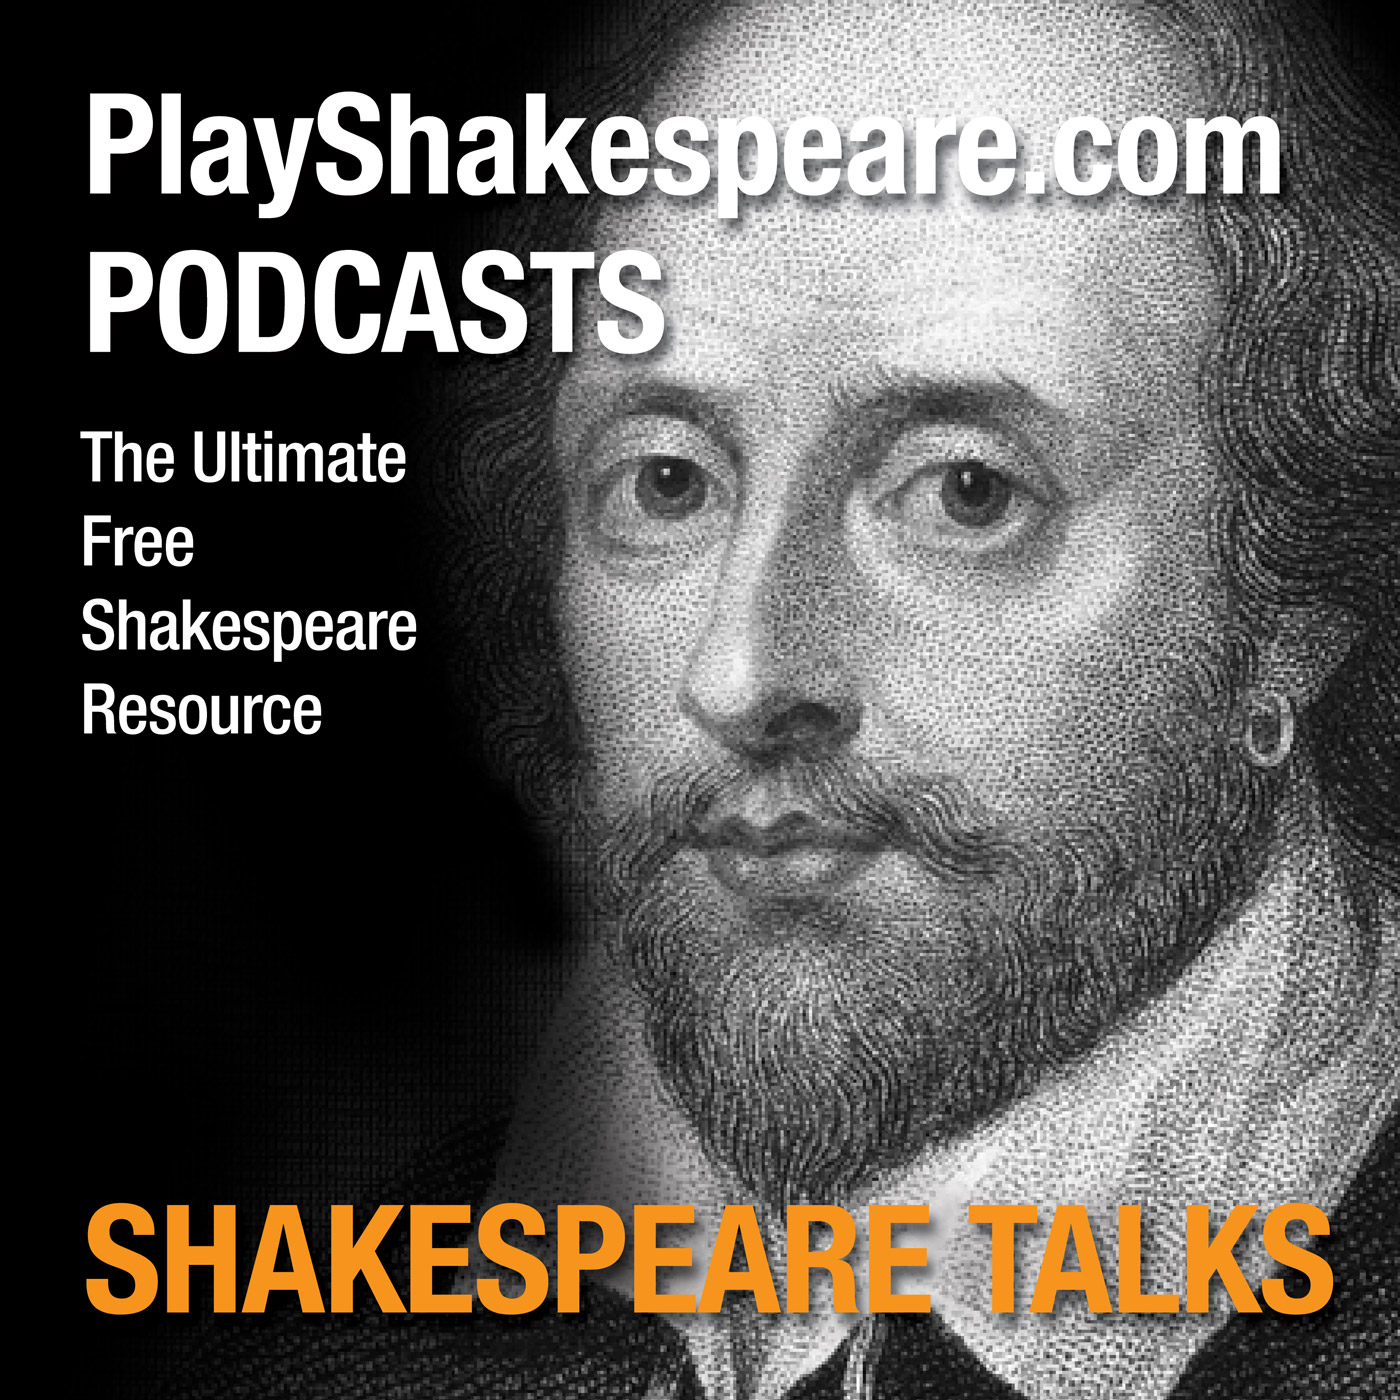 PlayShakespeare.com Podcasts